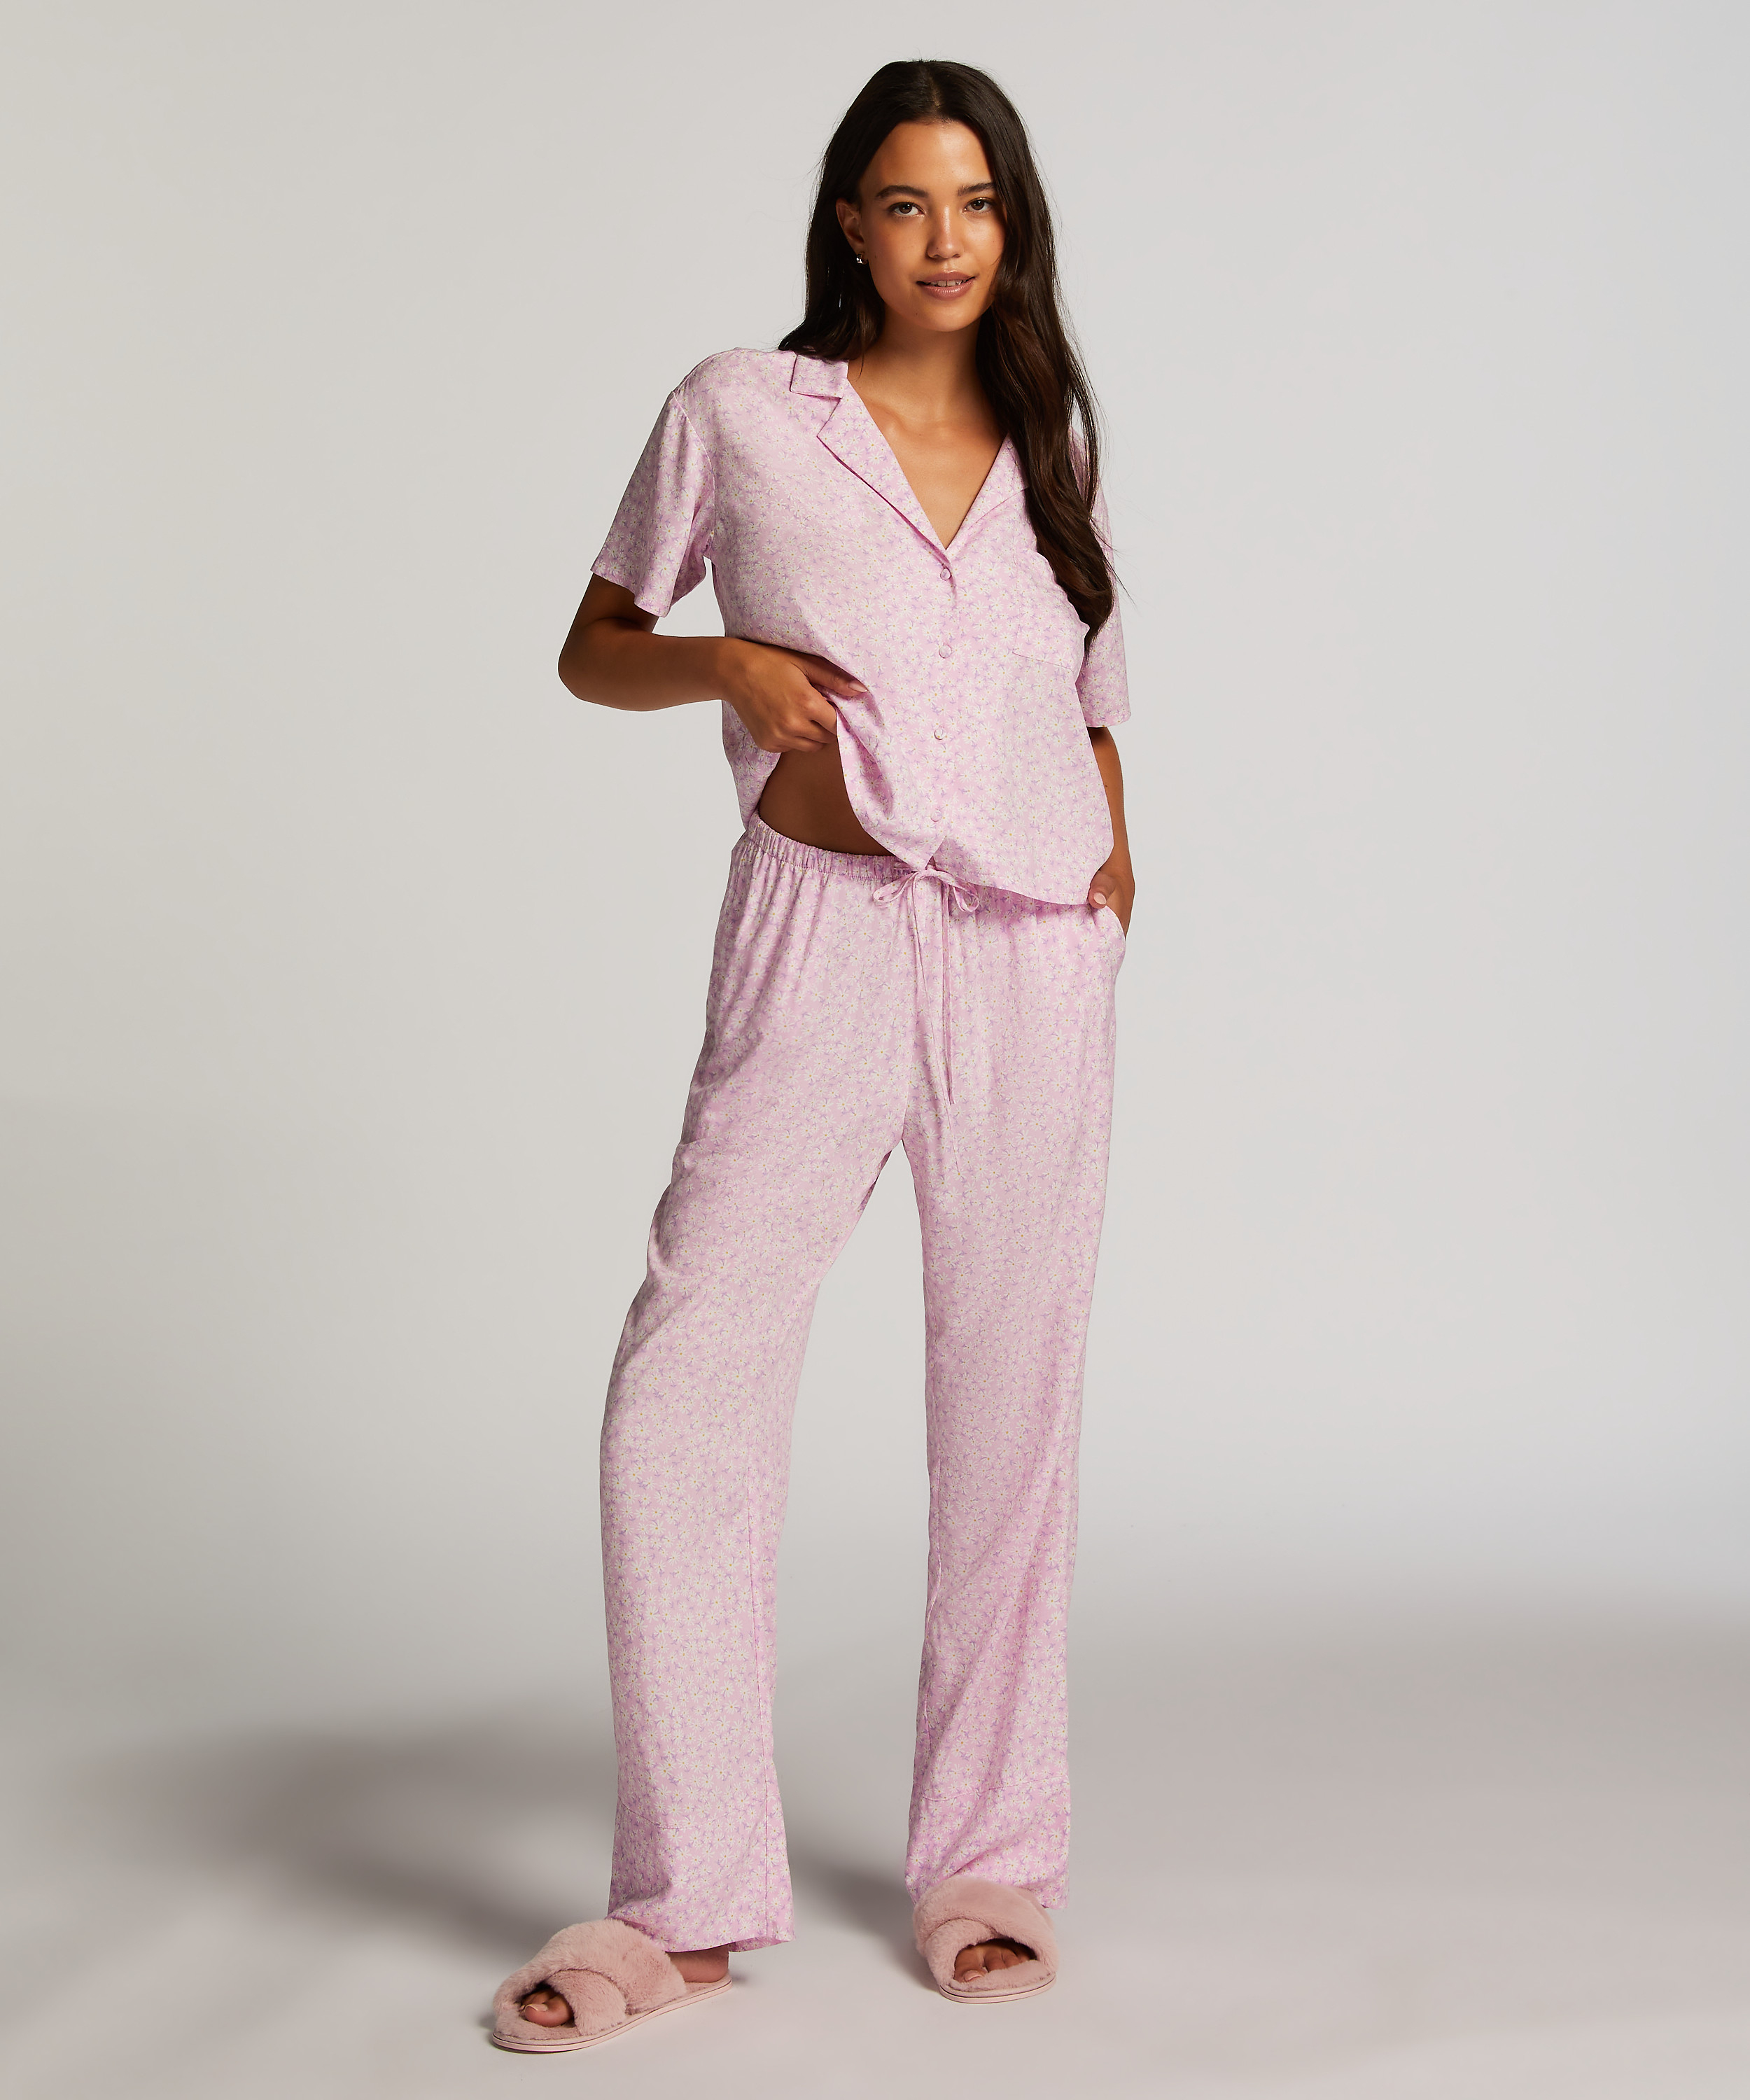 Woven pysjamasbukse Springbreakers, Rosa, main